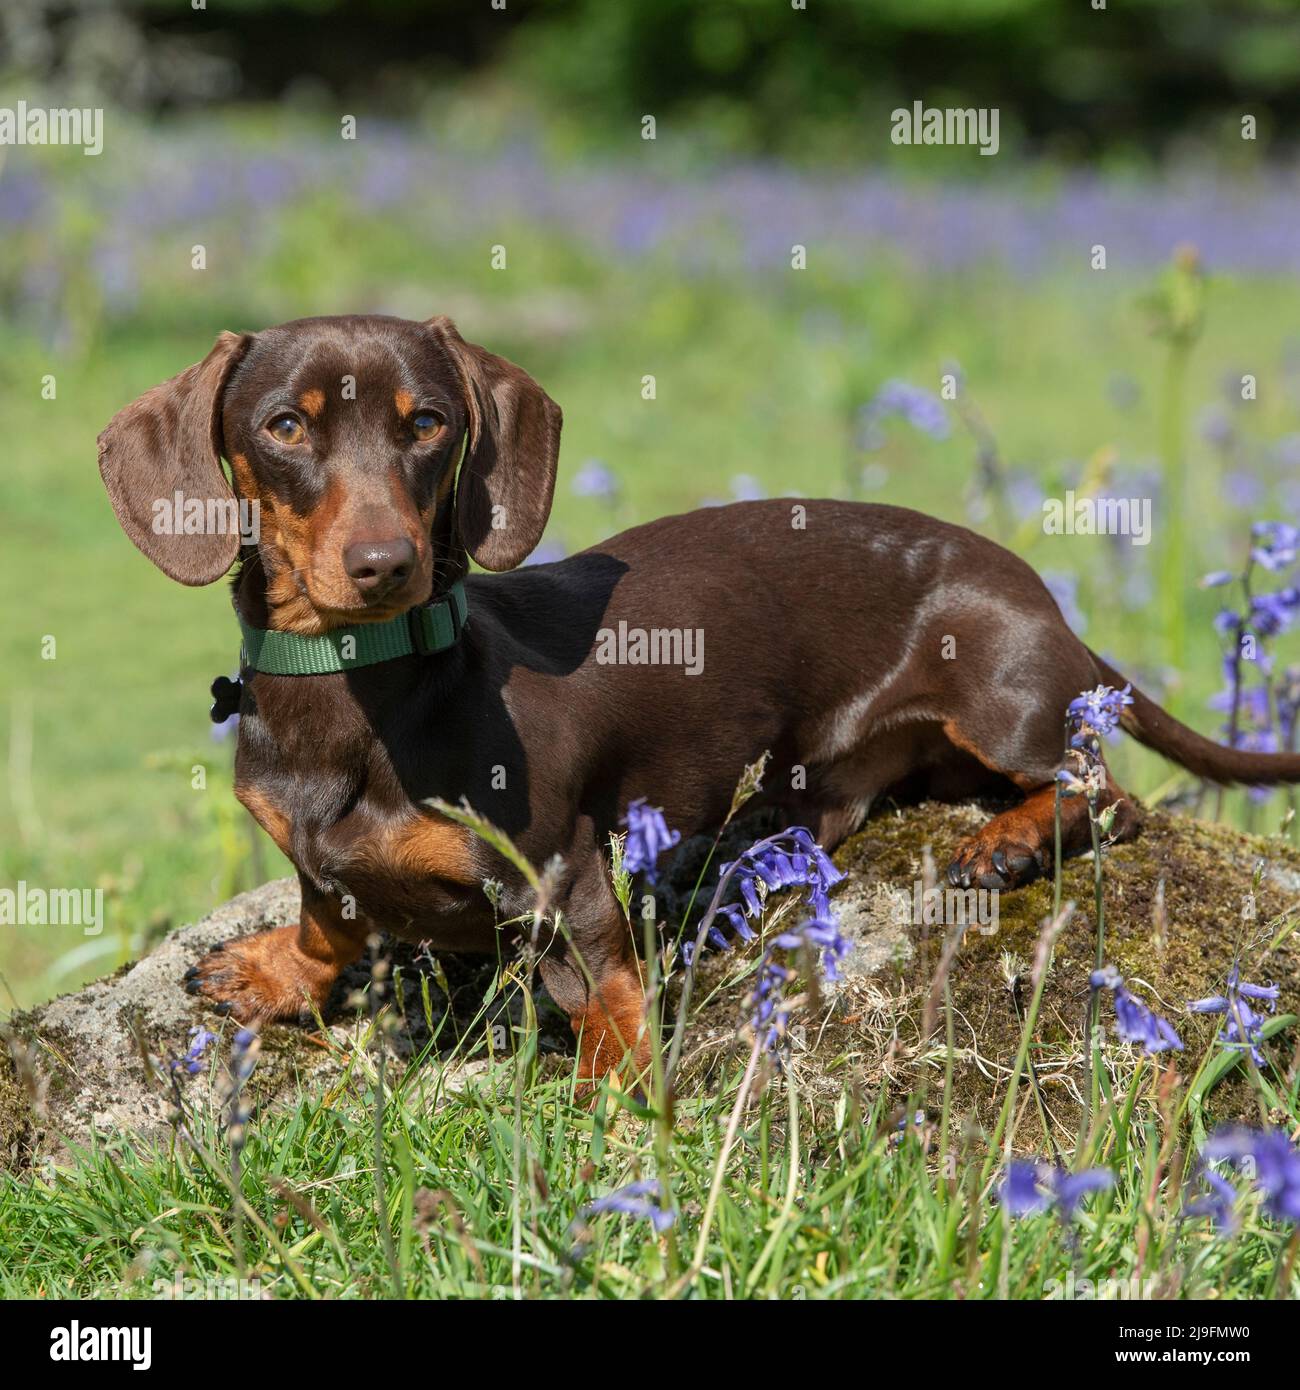 Miniature Smooth haired Dachshund Dog Stock Photo